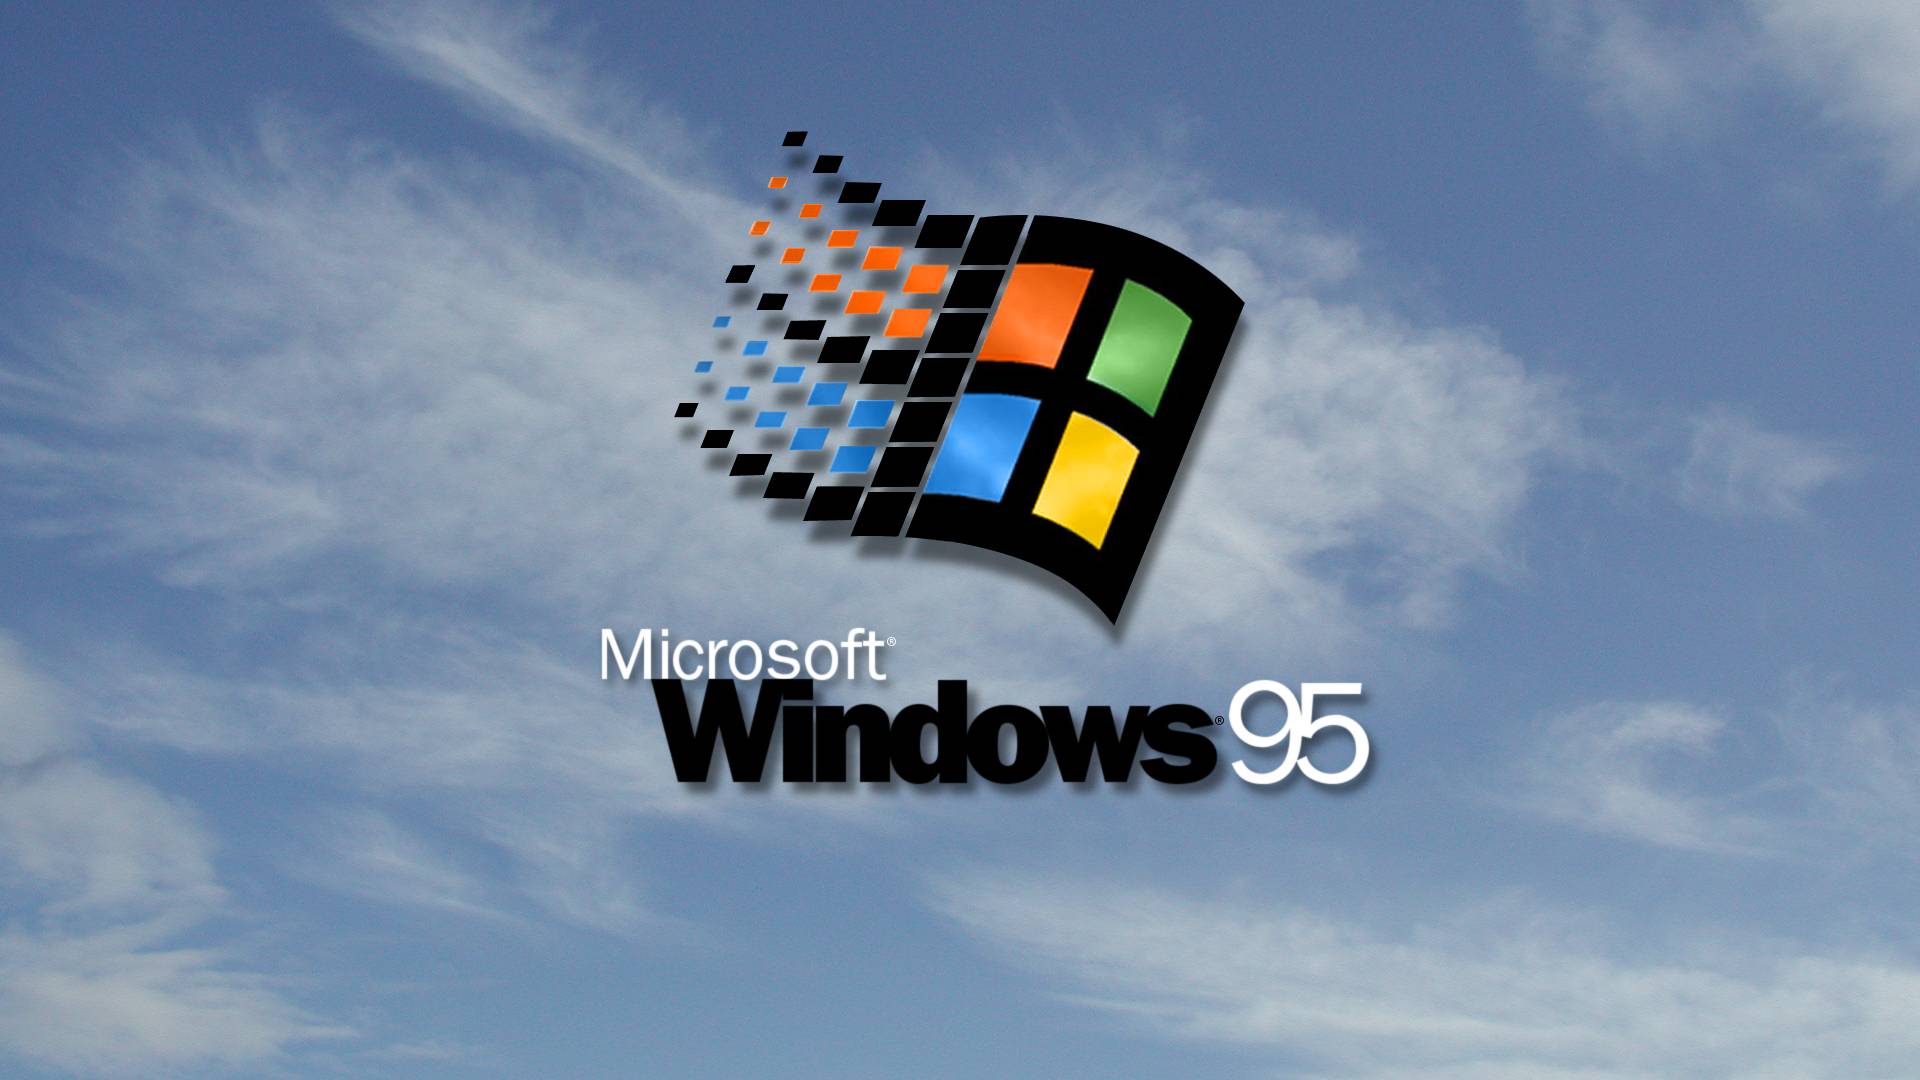 windows 95 wallpaper,logo,sky,rubik's cube,font,graphics